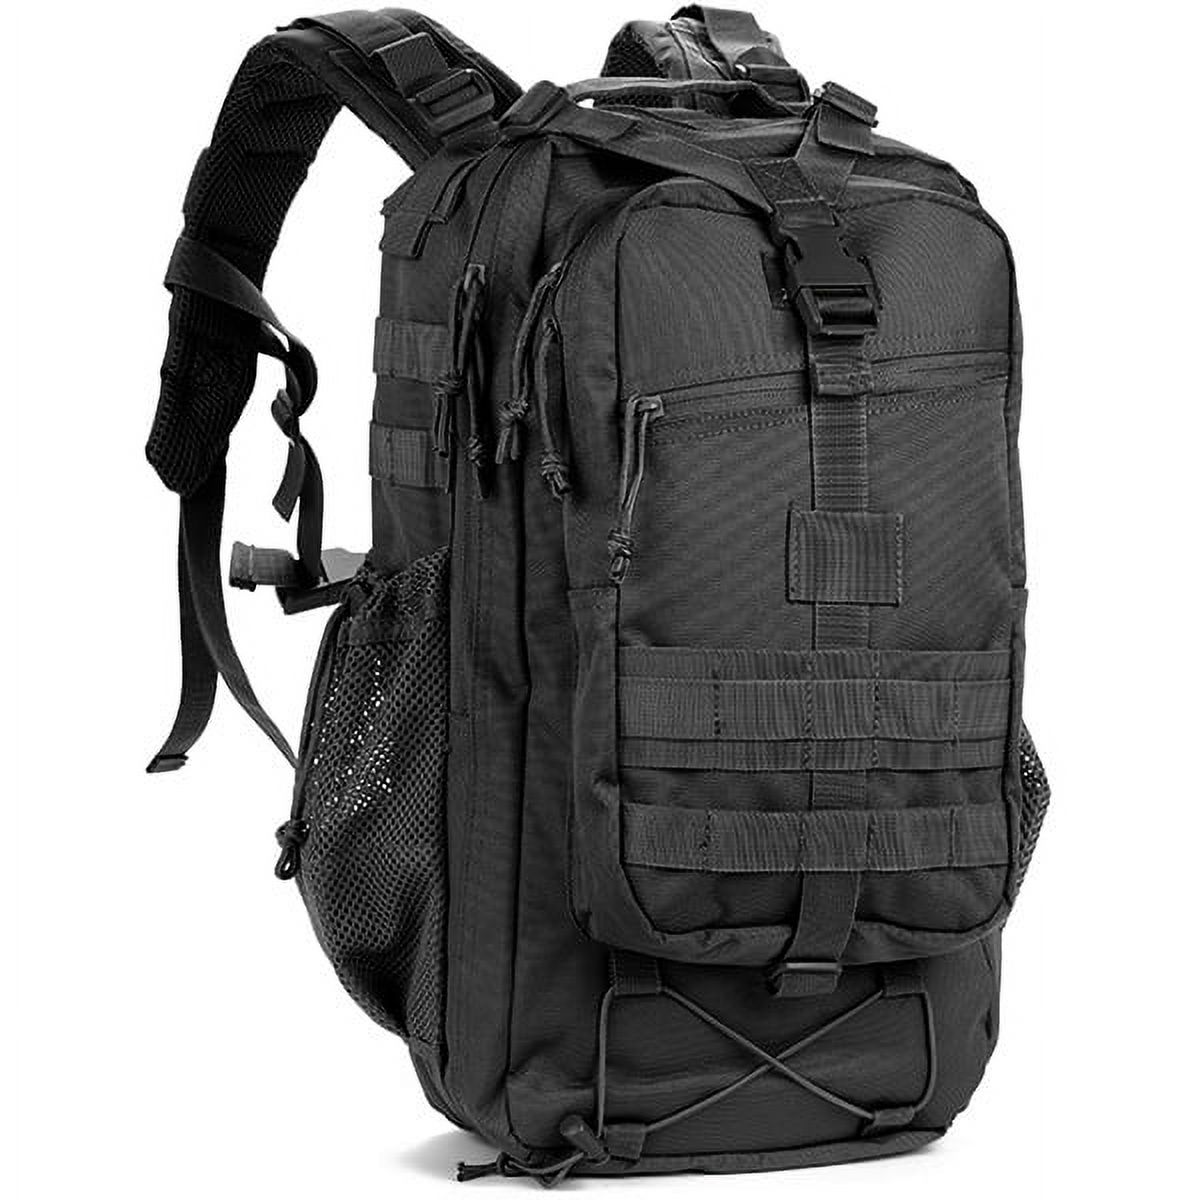 Summit Backpack - Black - image 1 of 2